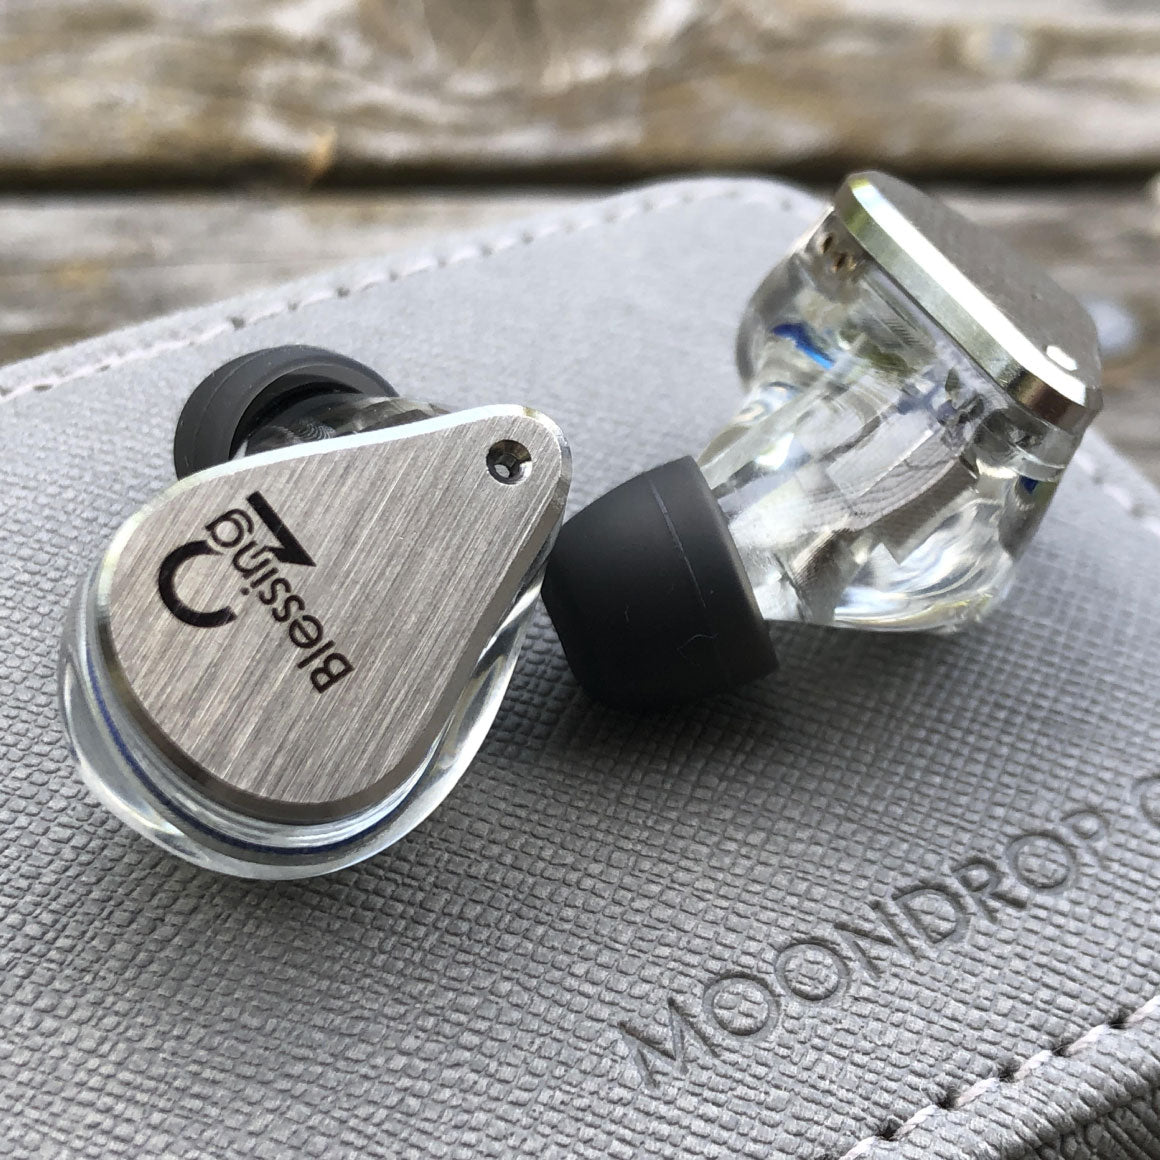 Moondrop Blessing 2 Hybrid In-Ear Earphones Online